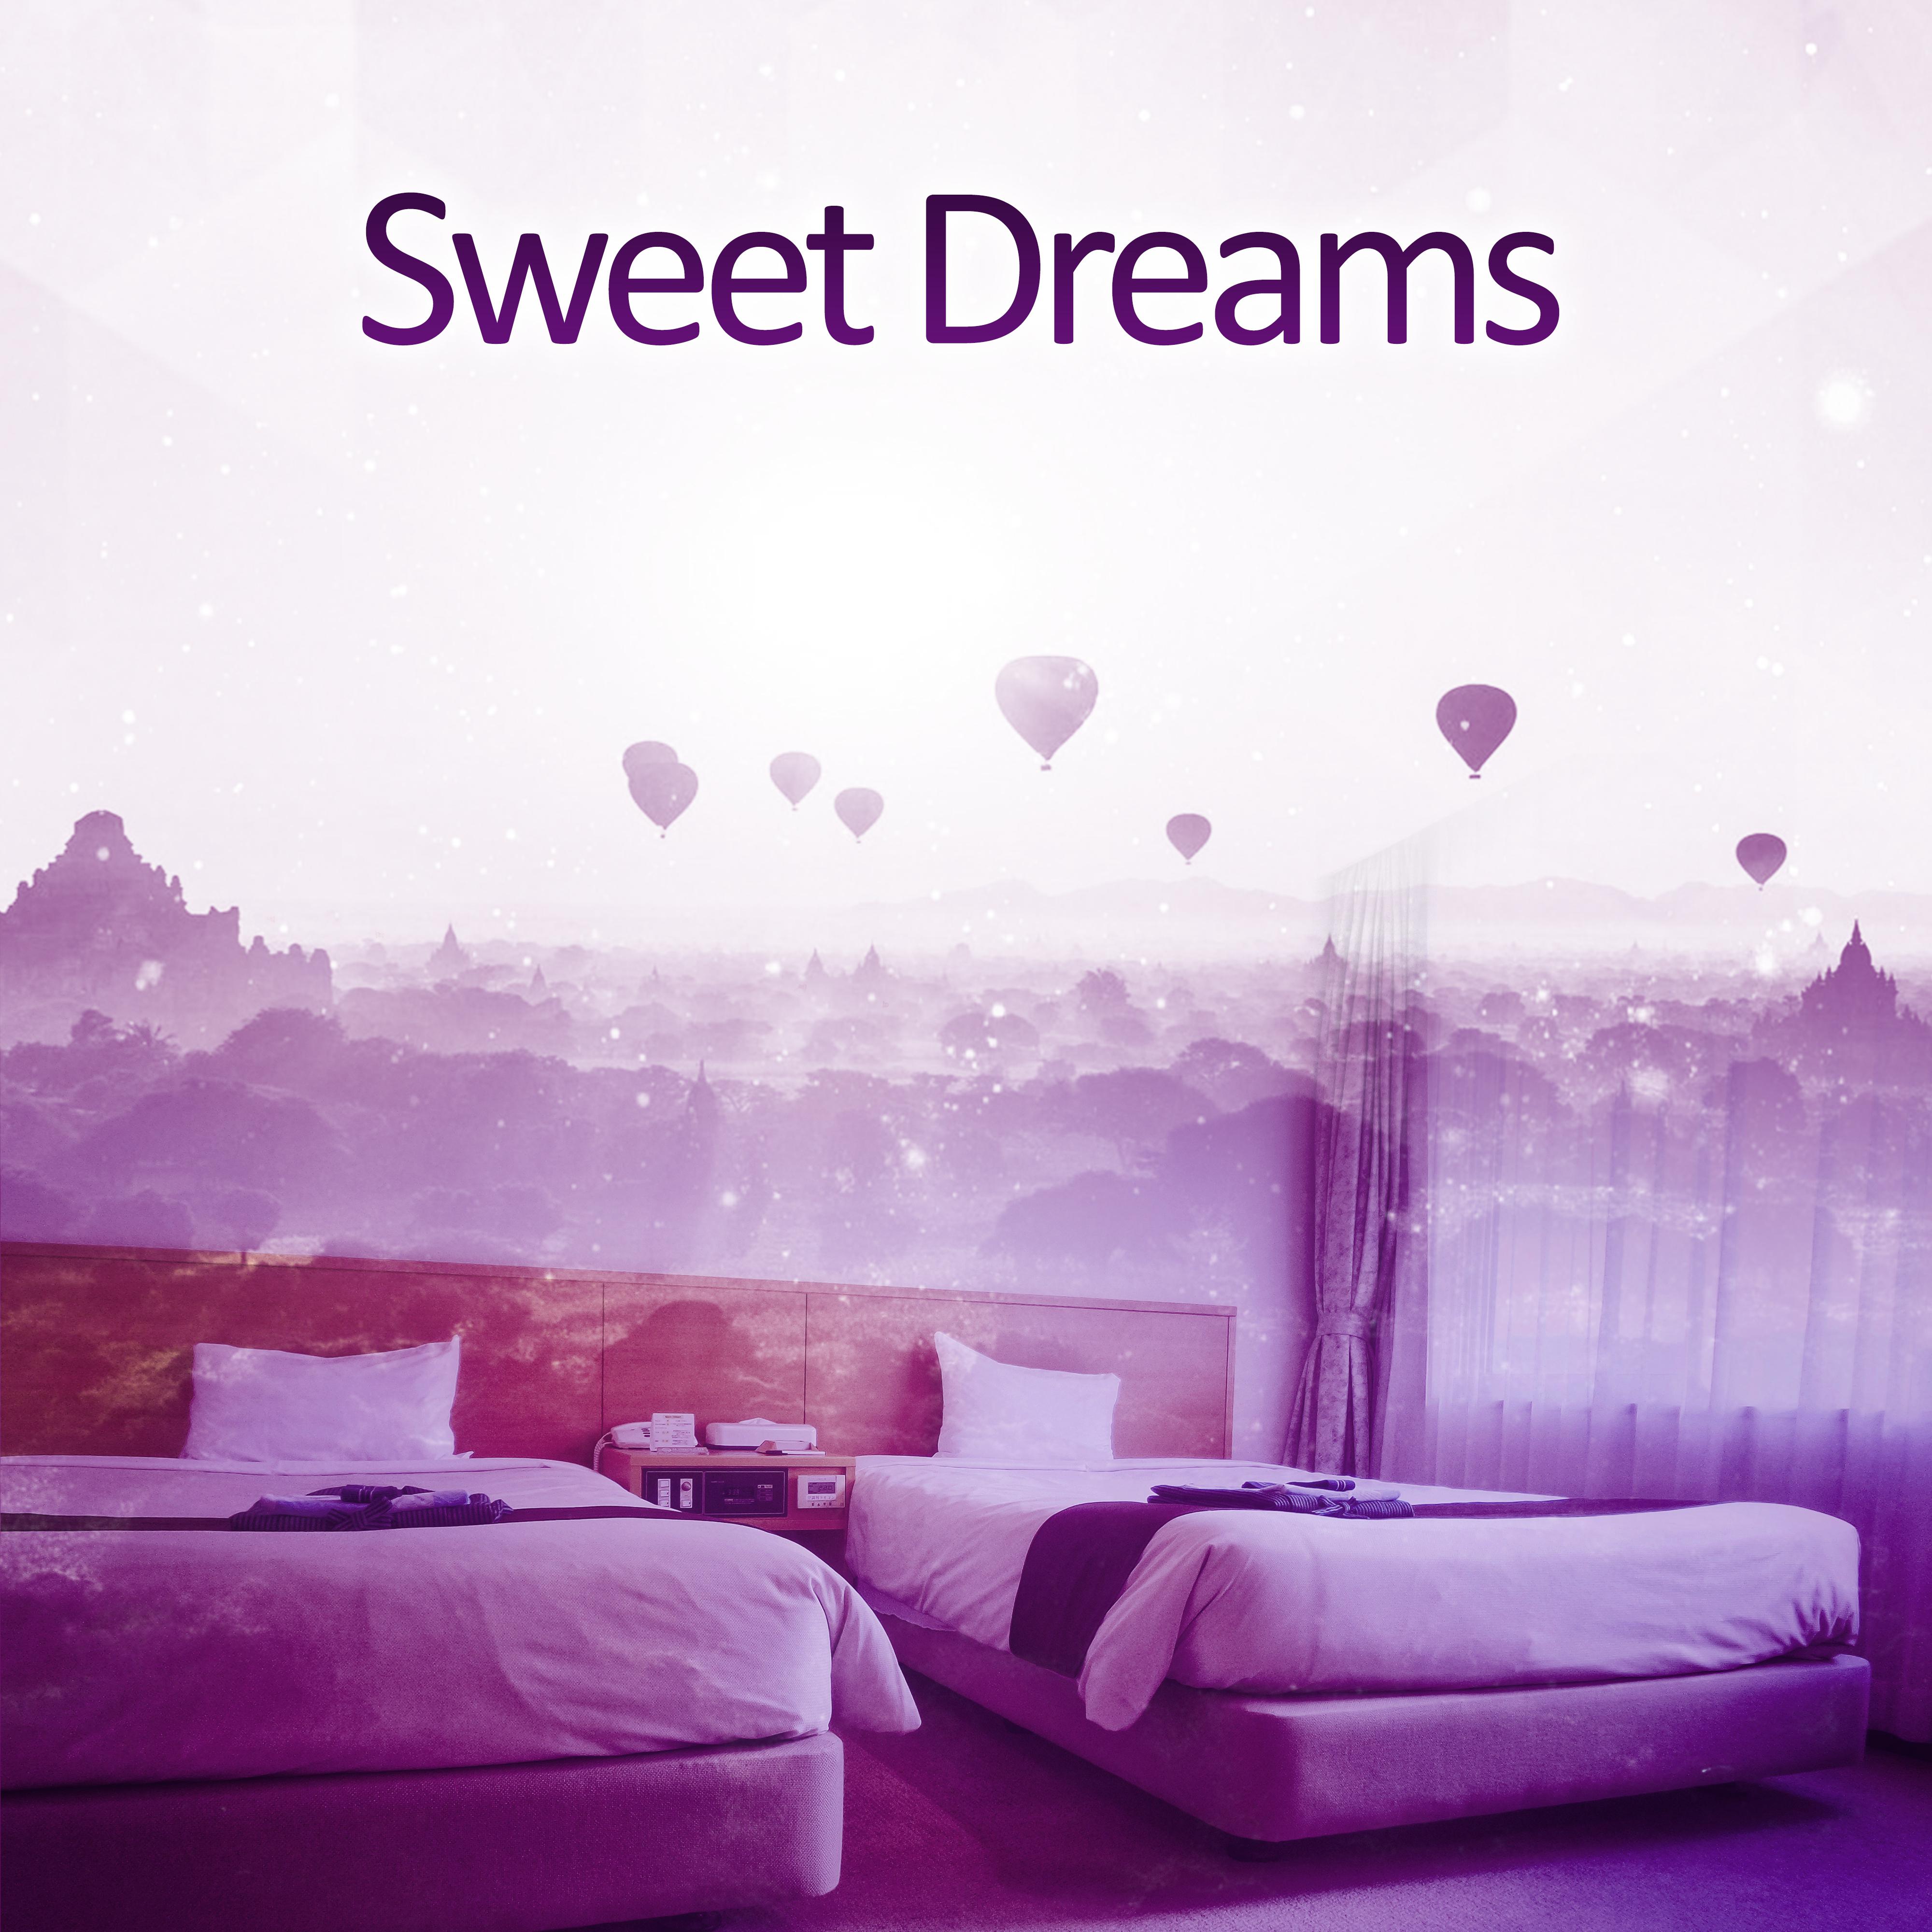 Sweet Dreams – Peaceful Music for Sleep, Stress Relief, Deep Sleep, Soft Sounds Help Sleep, Calm Nap, Ambient Dreams